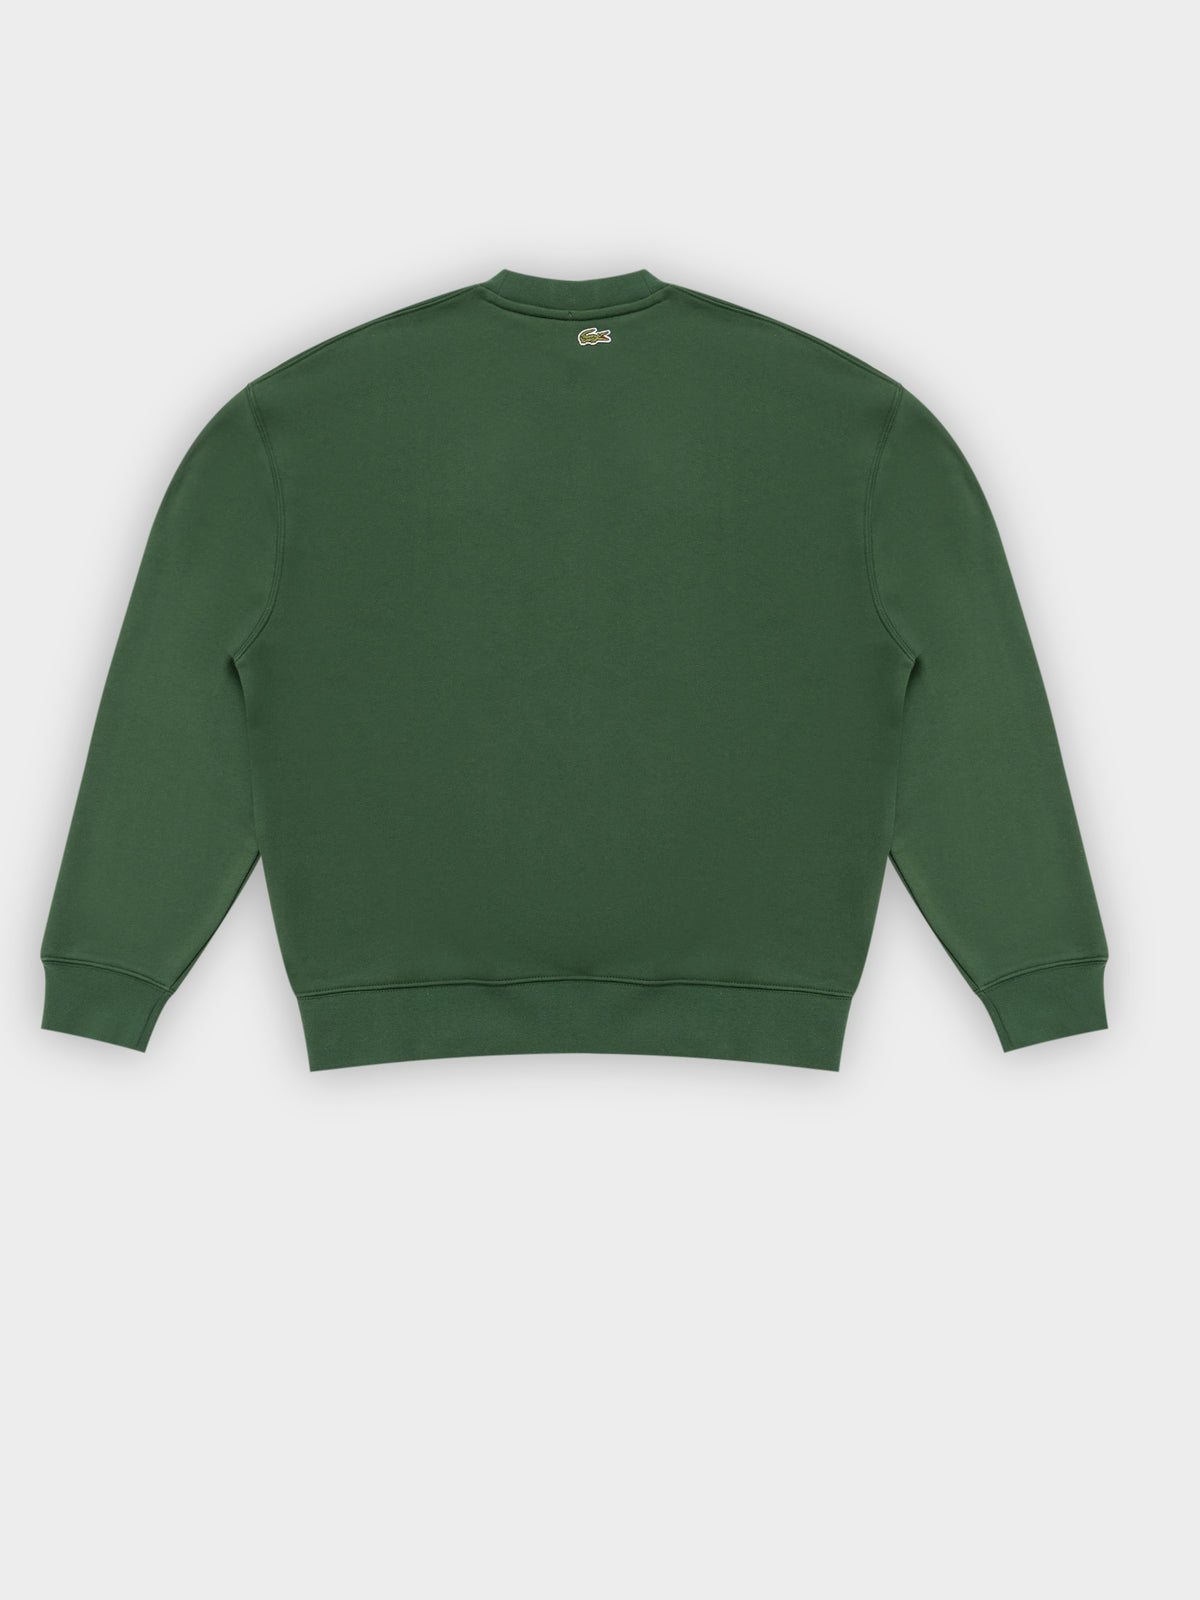 Originals Loose Sweater in Green